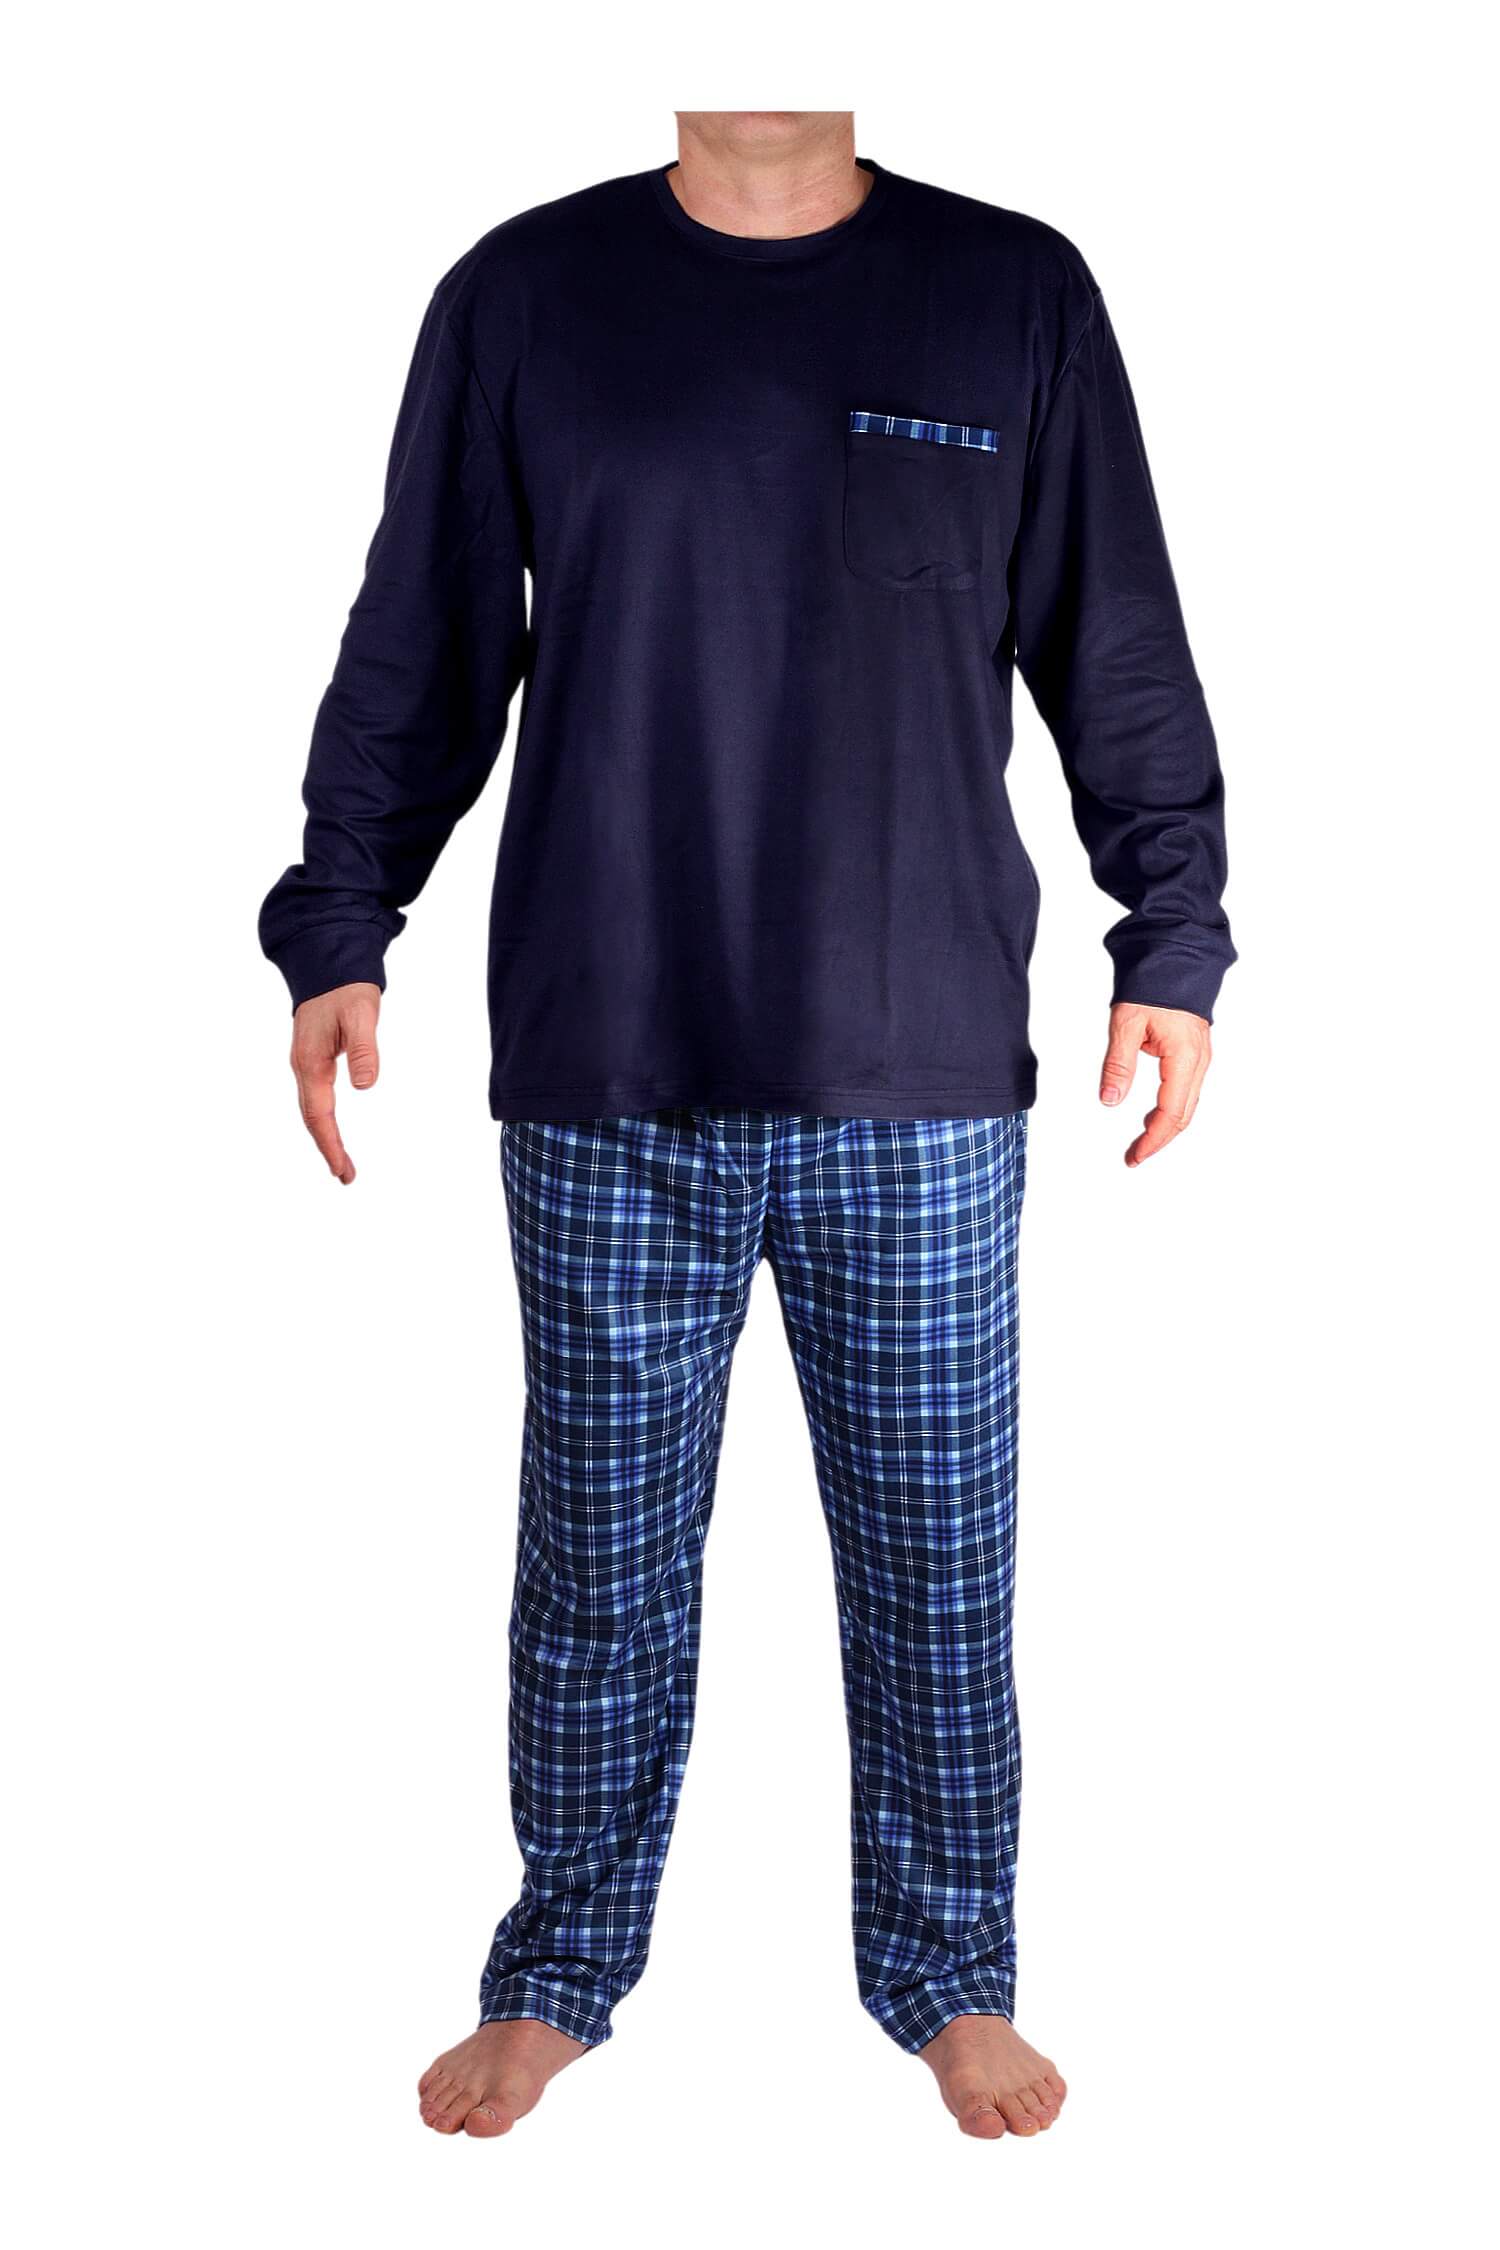 Zdenda Lux pánské pyžamo s flísem 3XL tmavě modrá